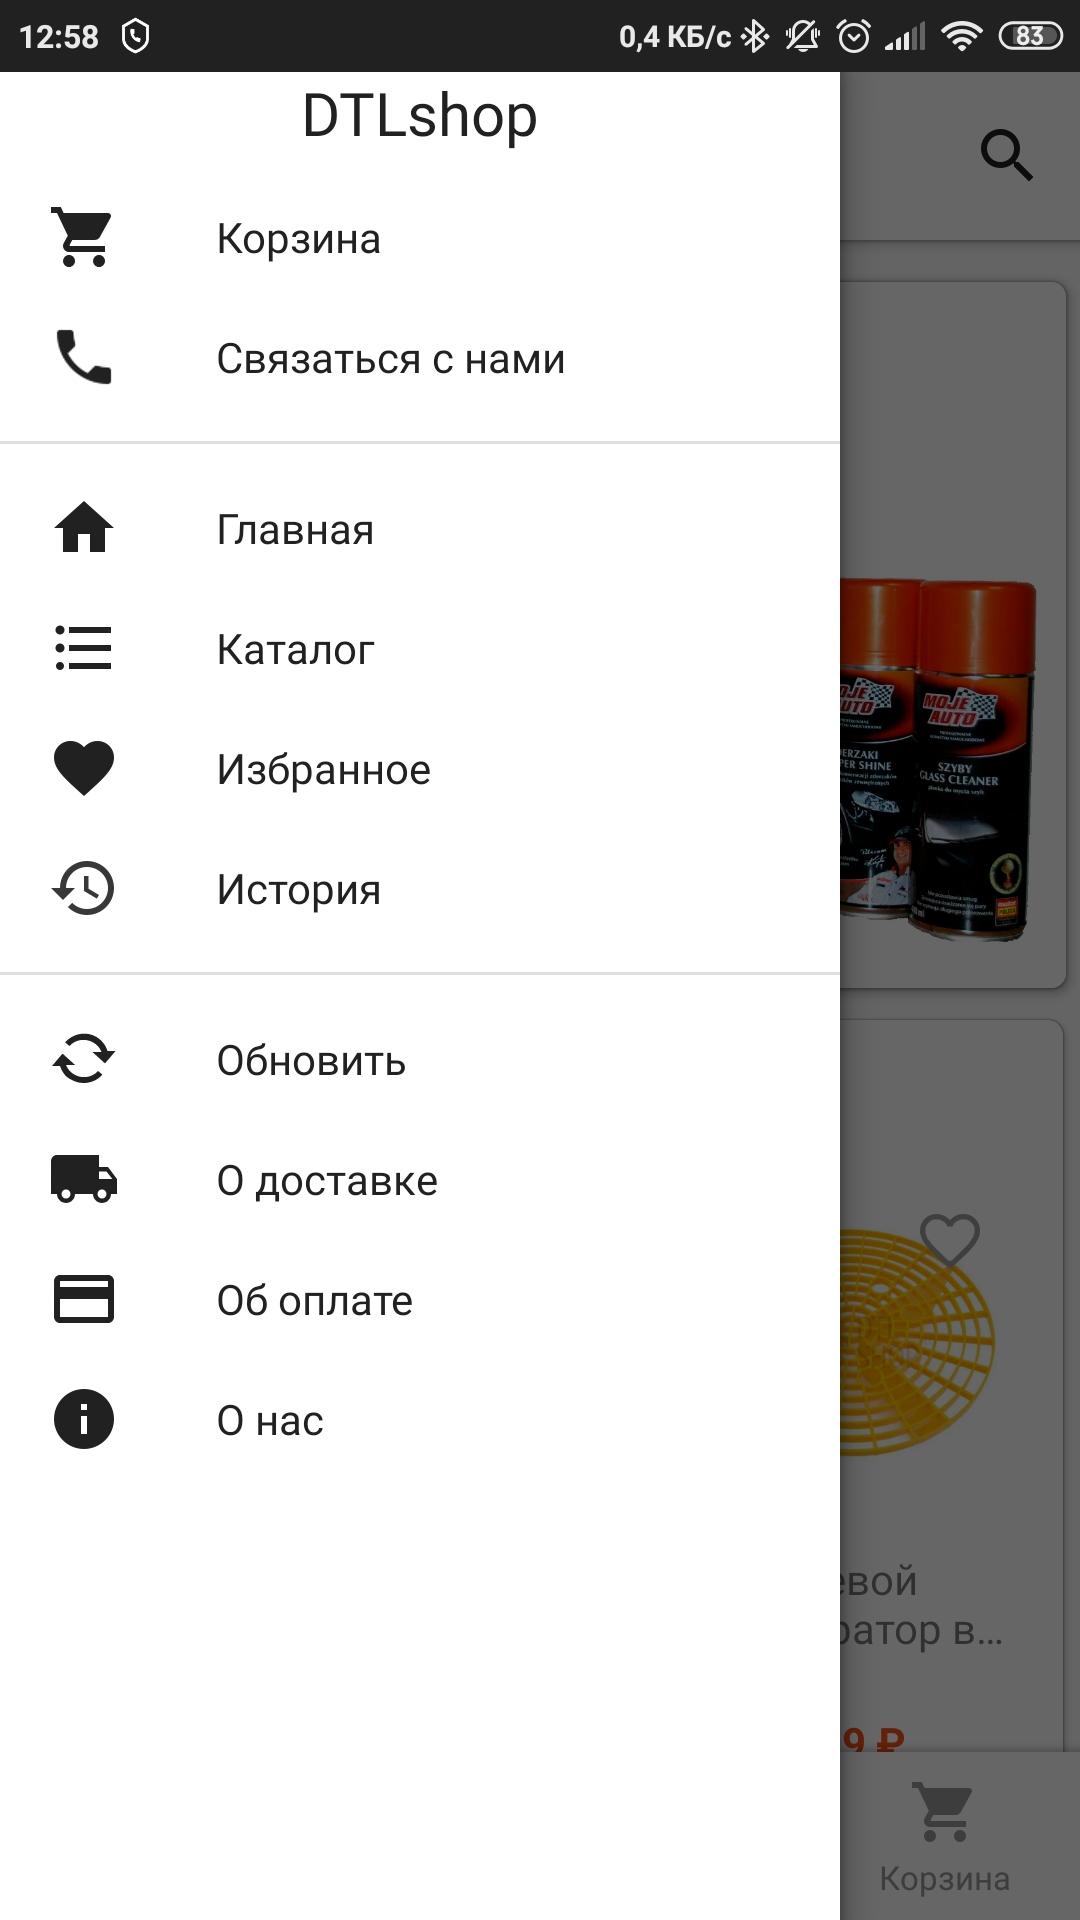 DTLshop.ru - detaling market 4.177.A.0 Screenshot 9